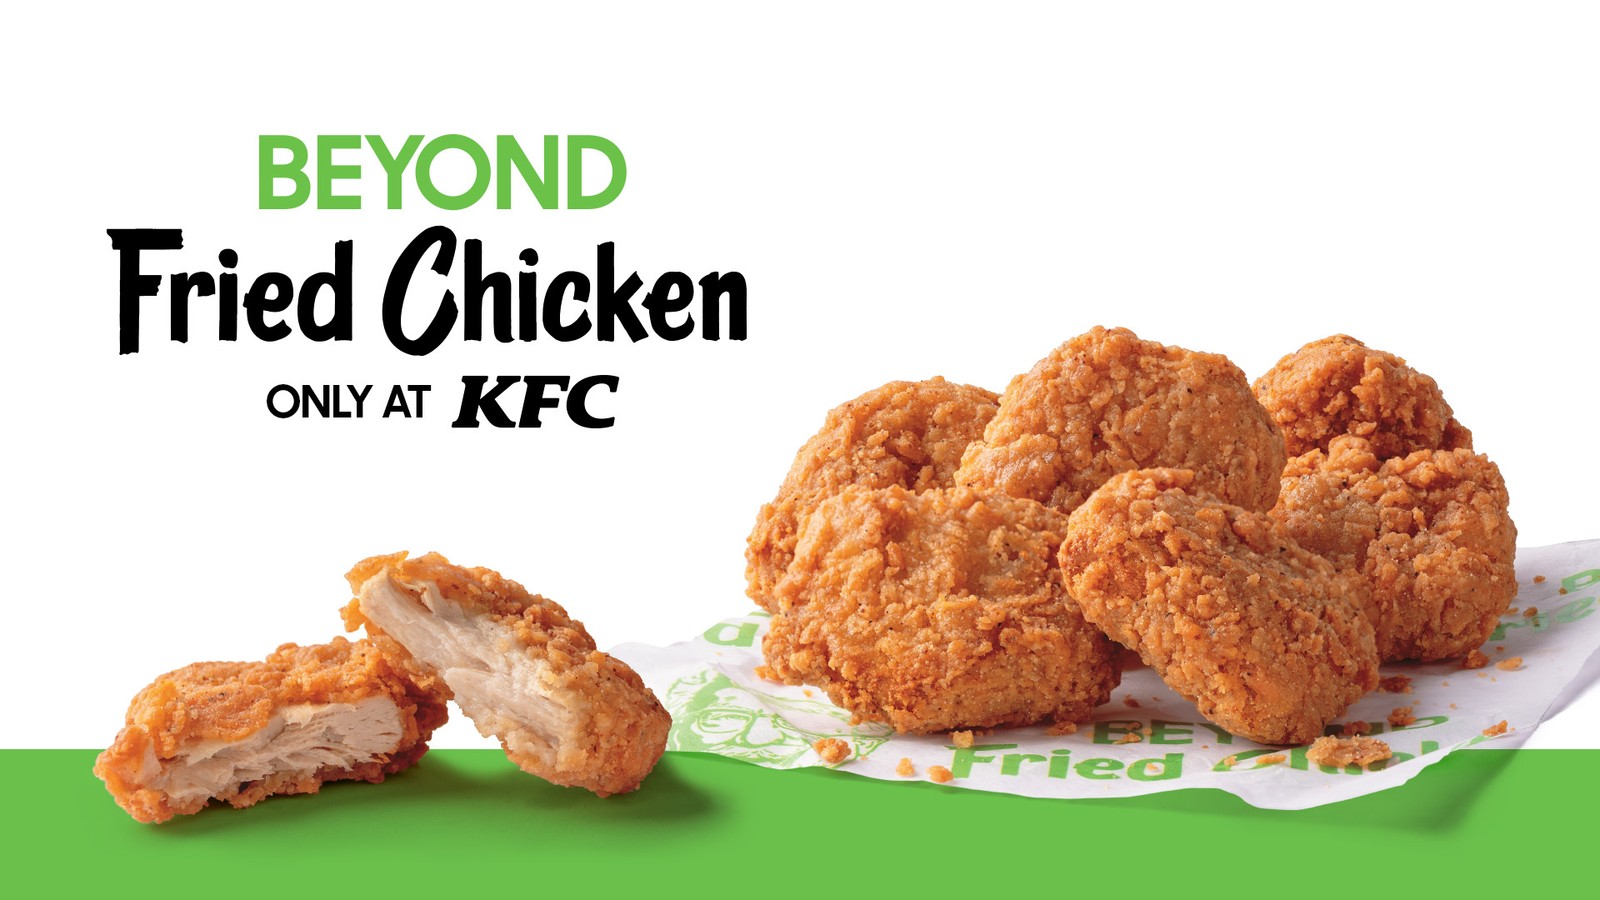 kfc-beyond-fried-chicken